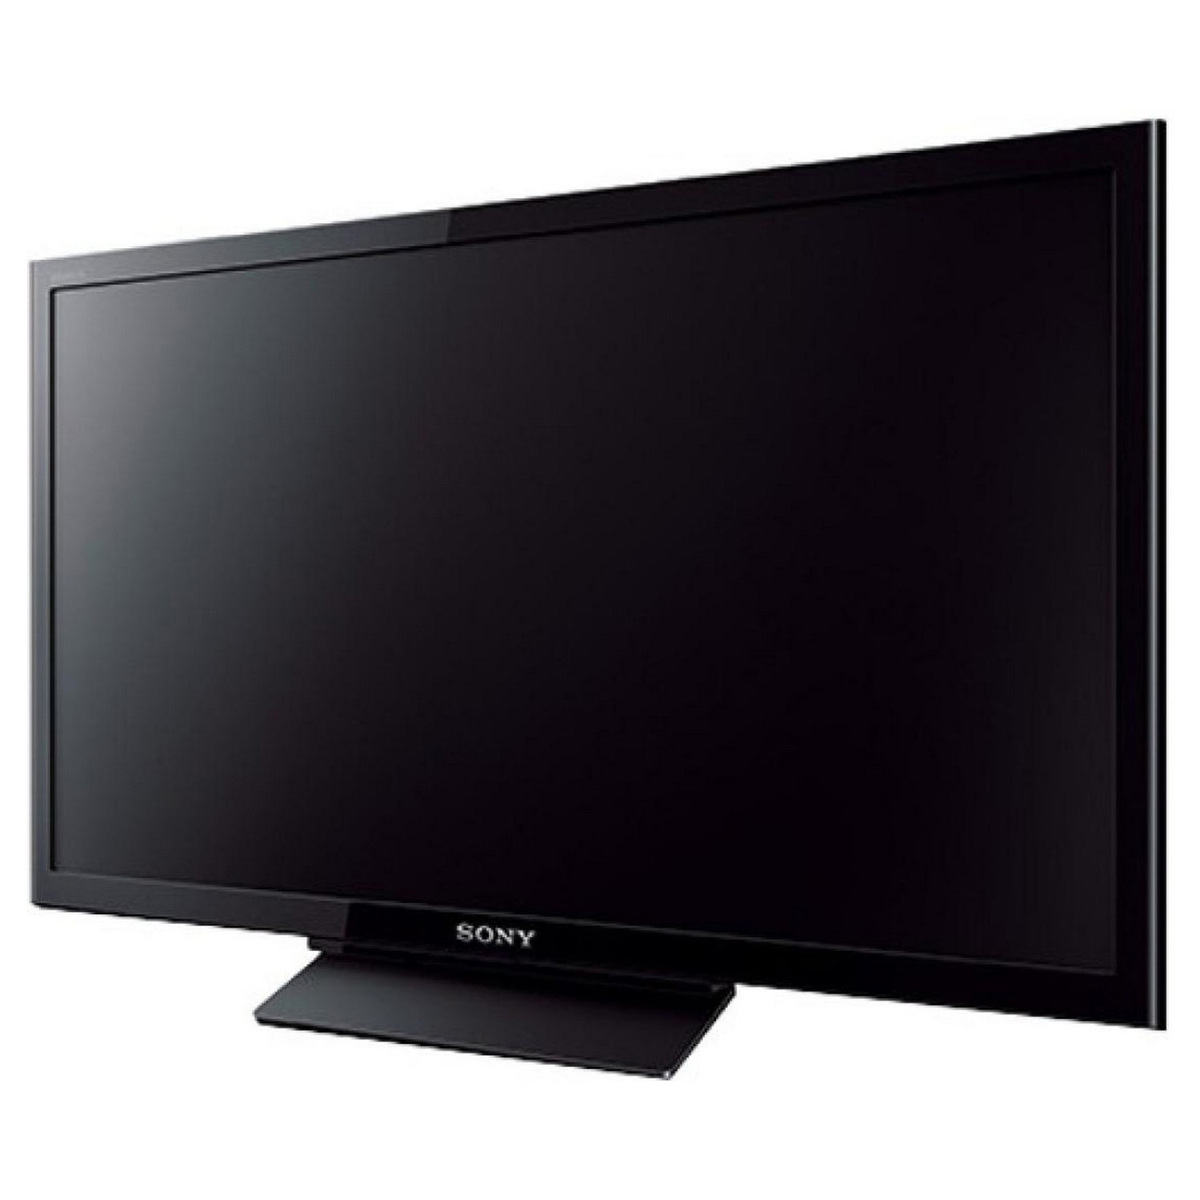 Sony Bravia HD LED TV KLV-24P413D 24"